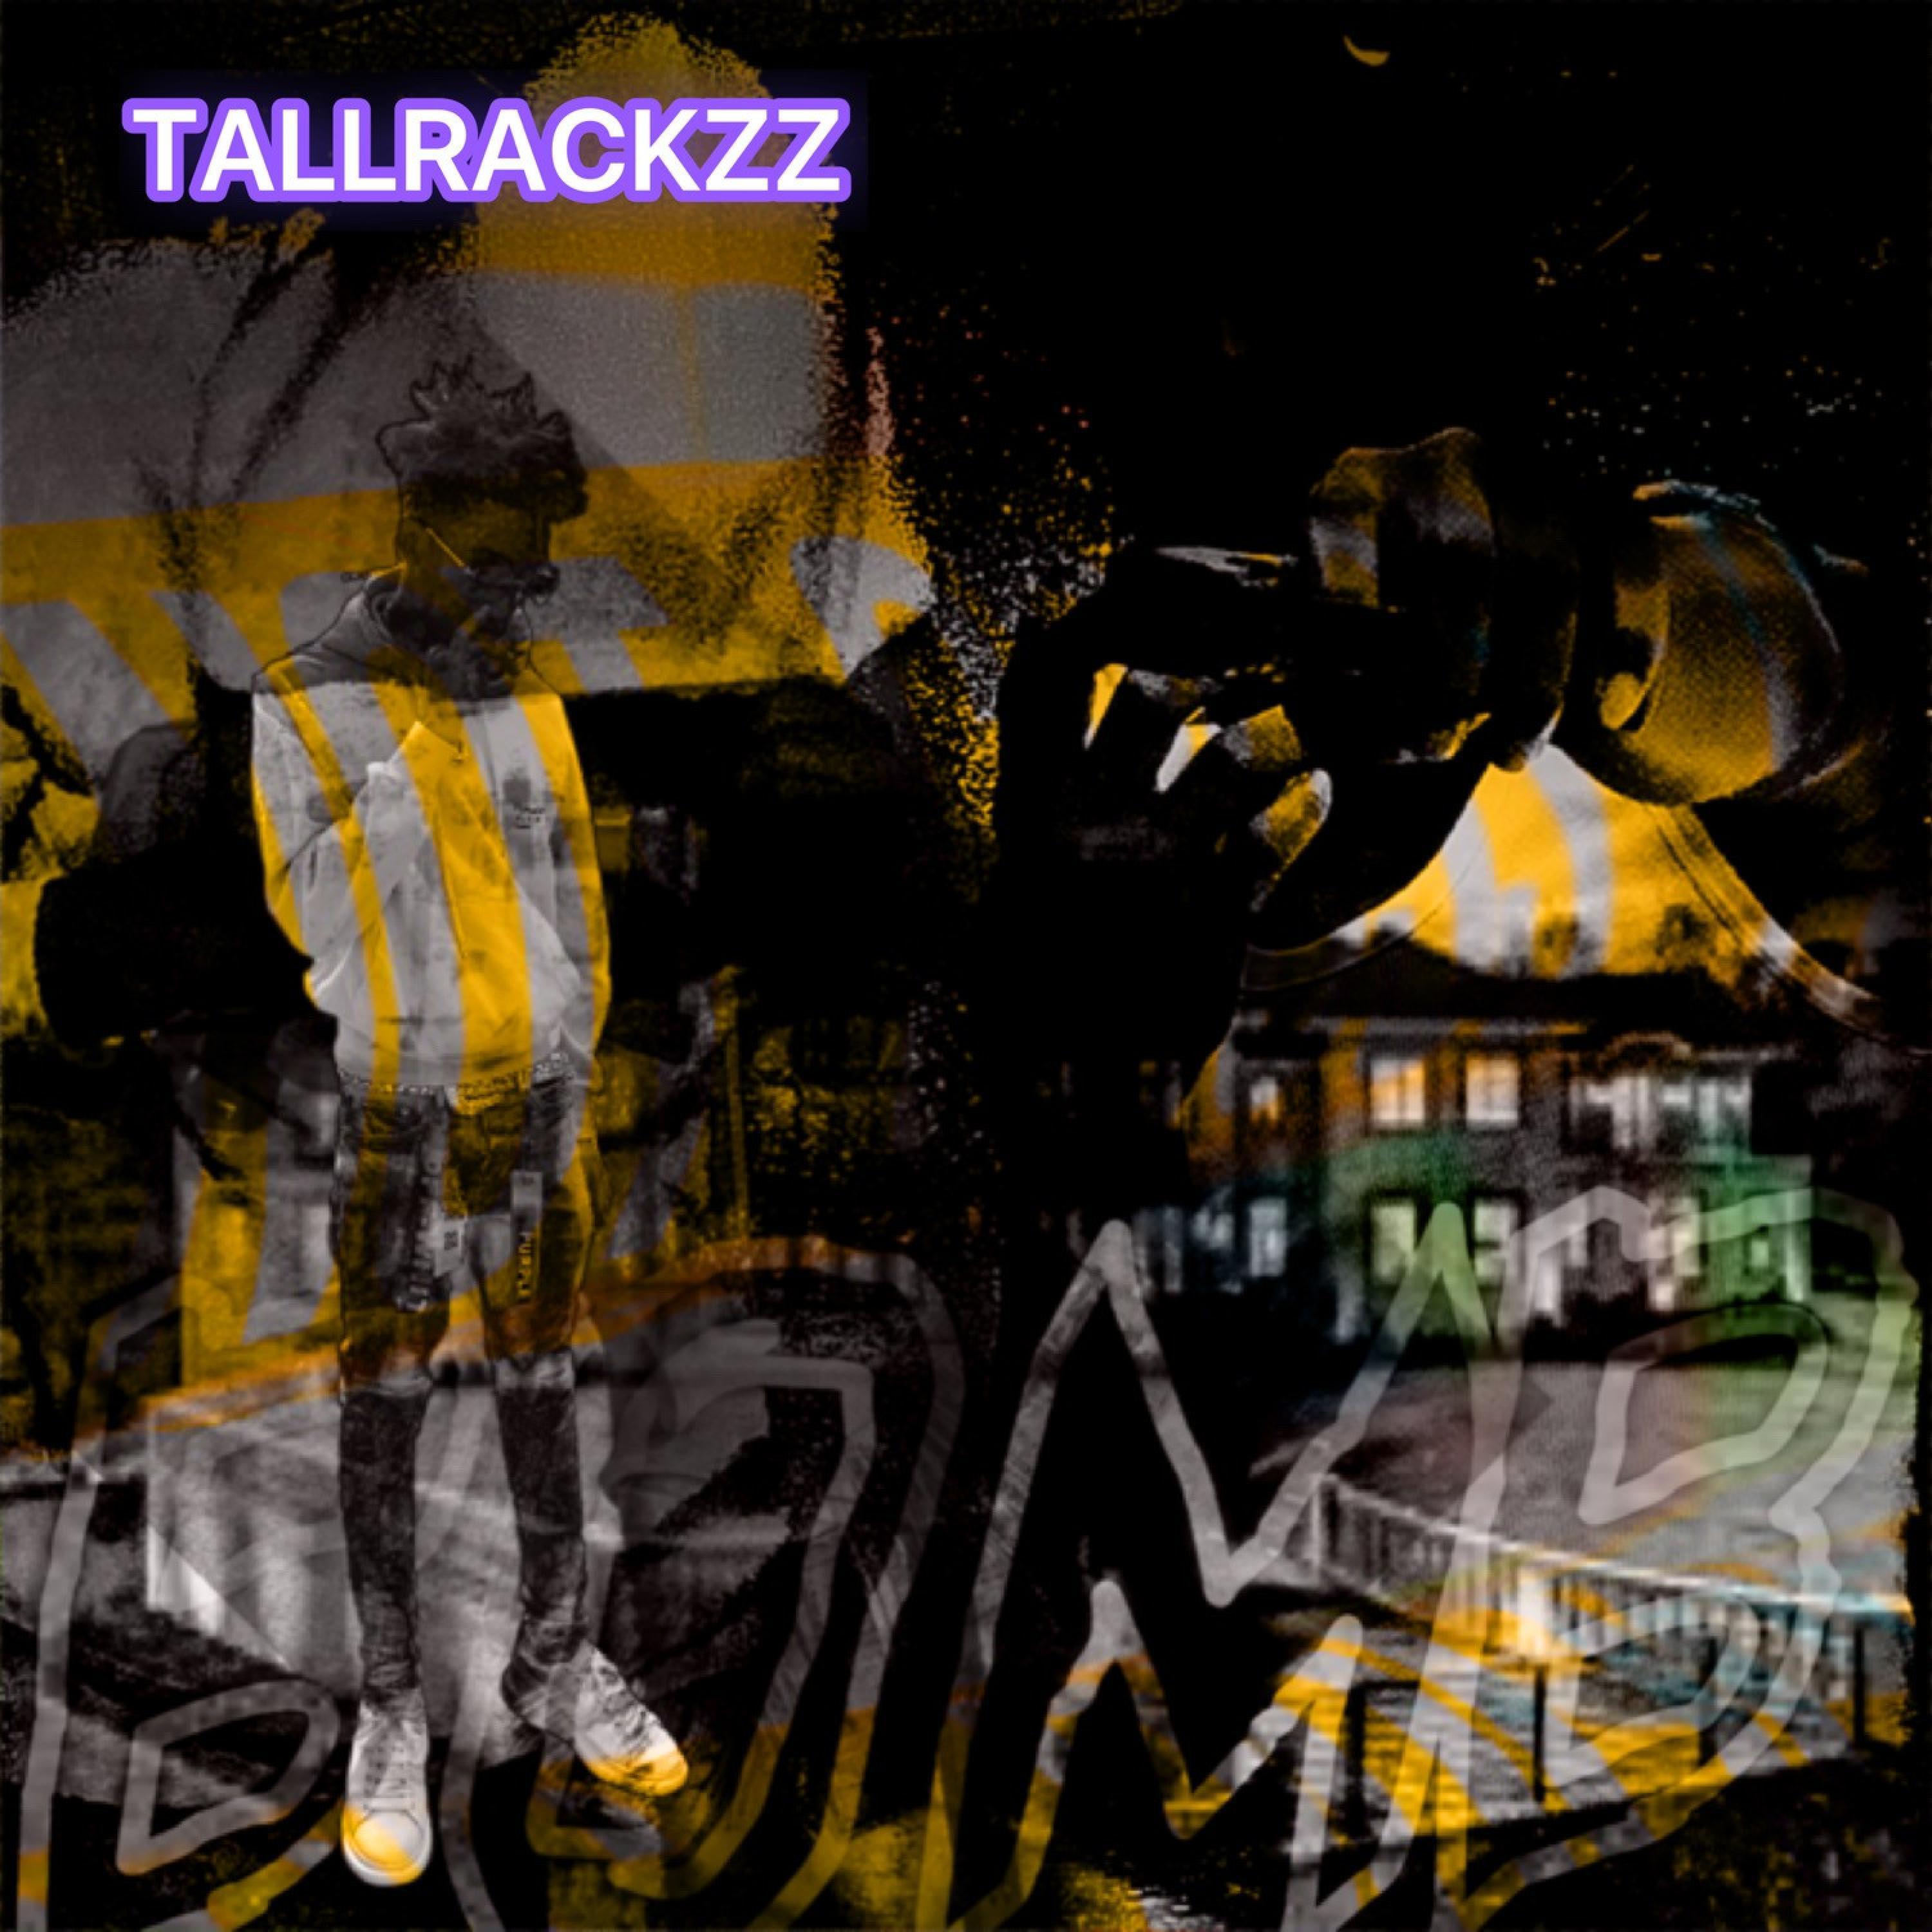 TallRackzz - Slide for fun (feat. Baby militant & 1lilzi)